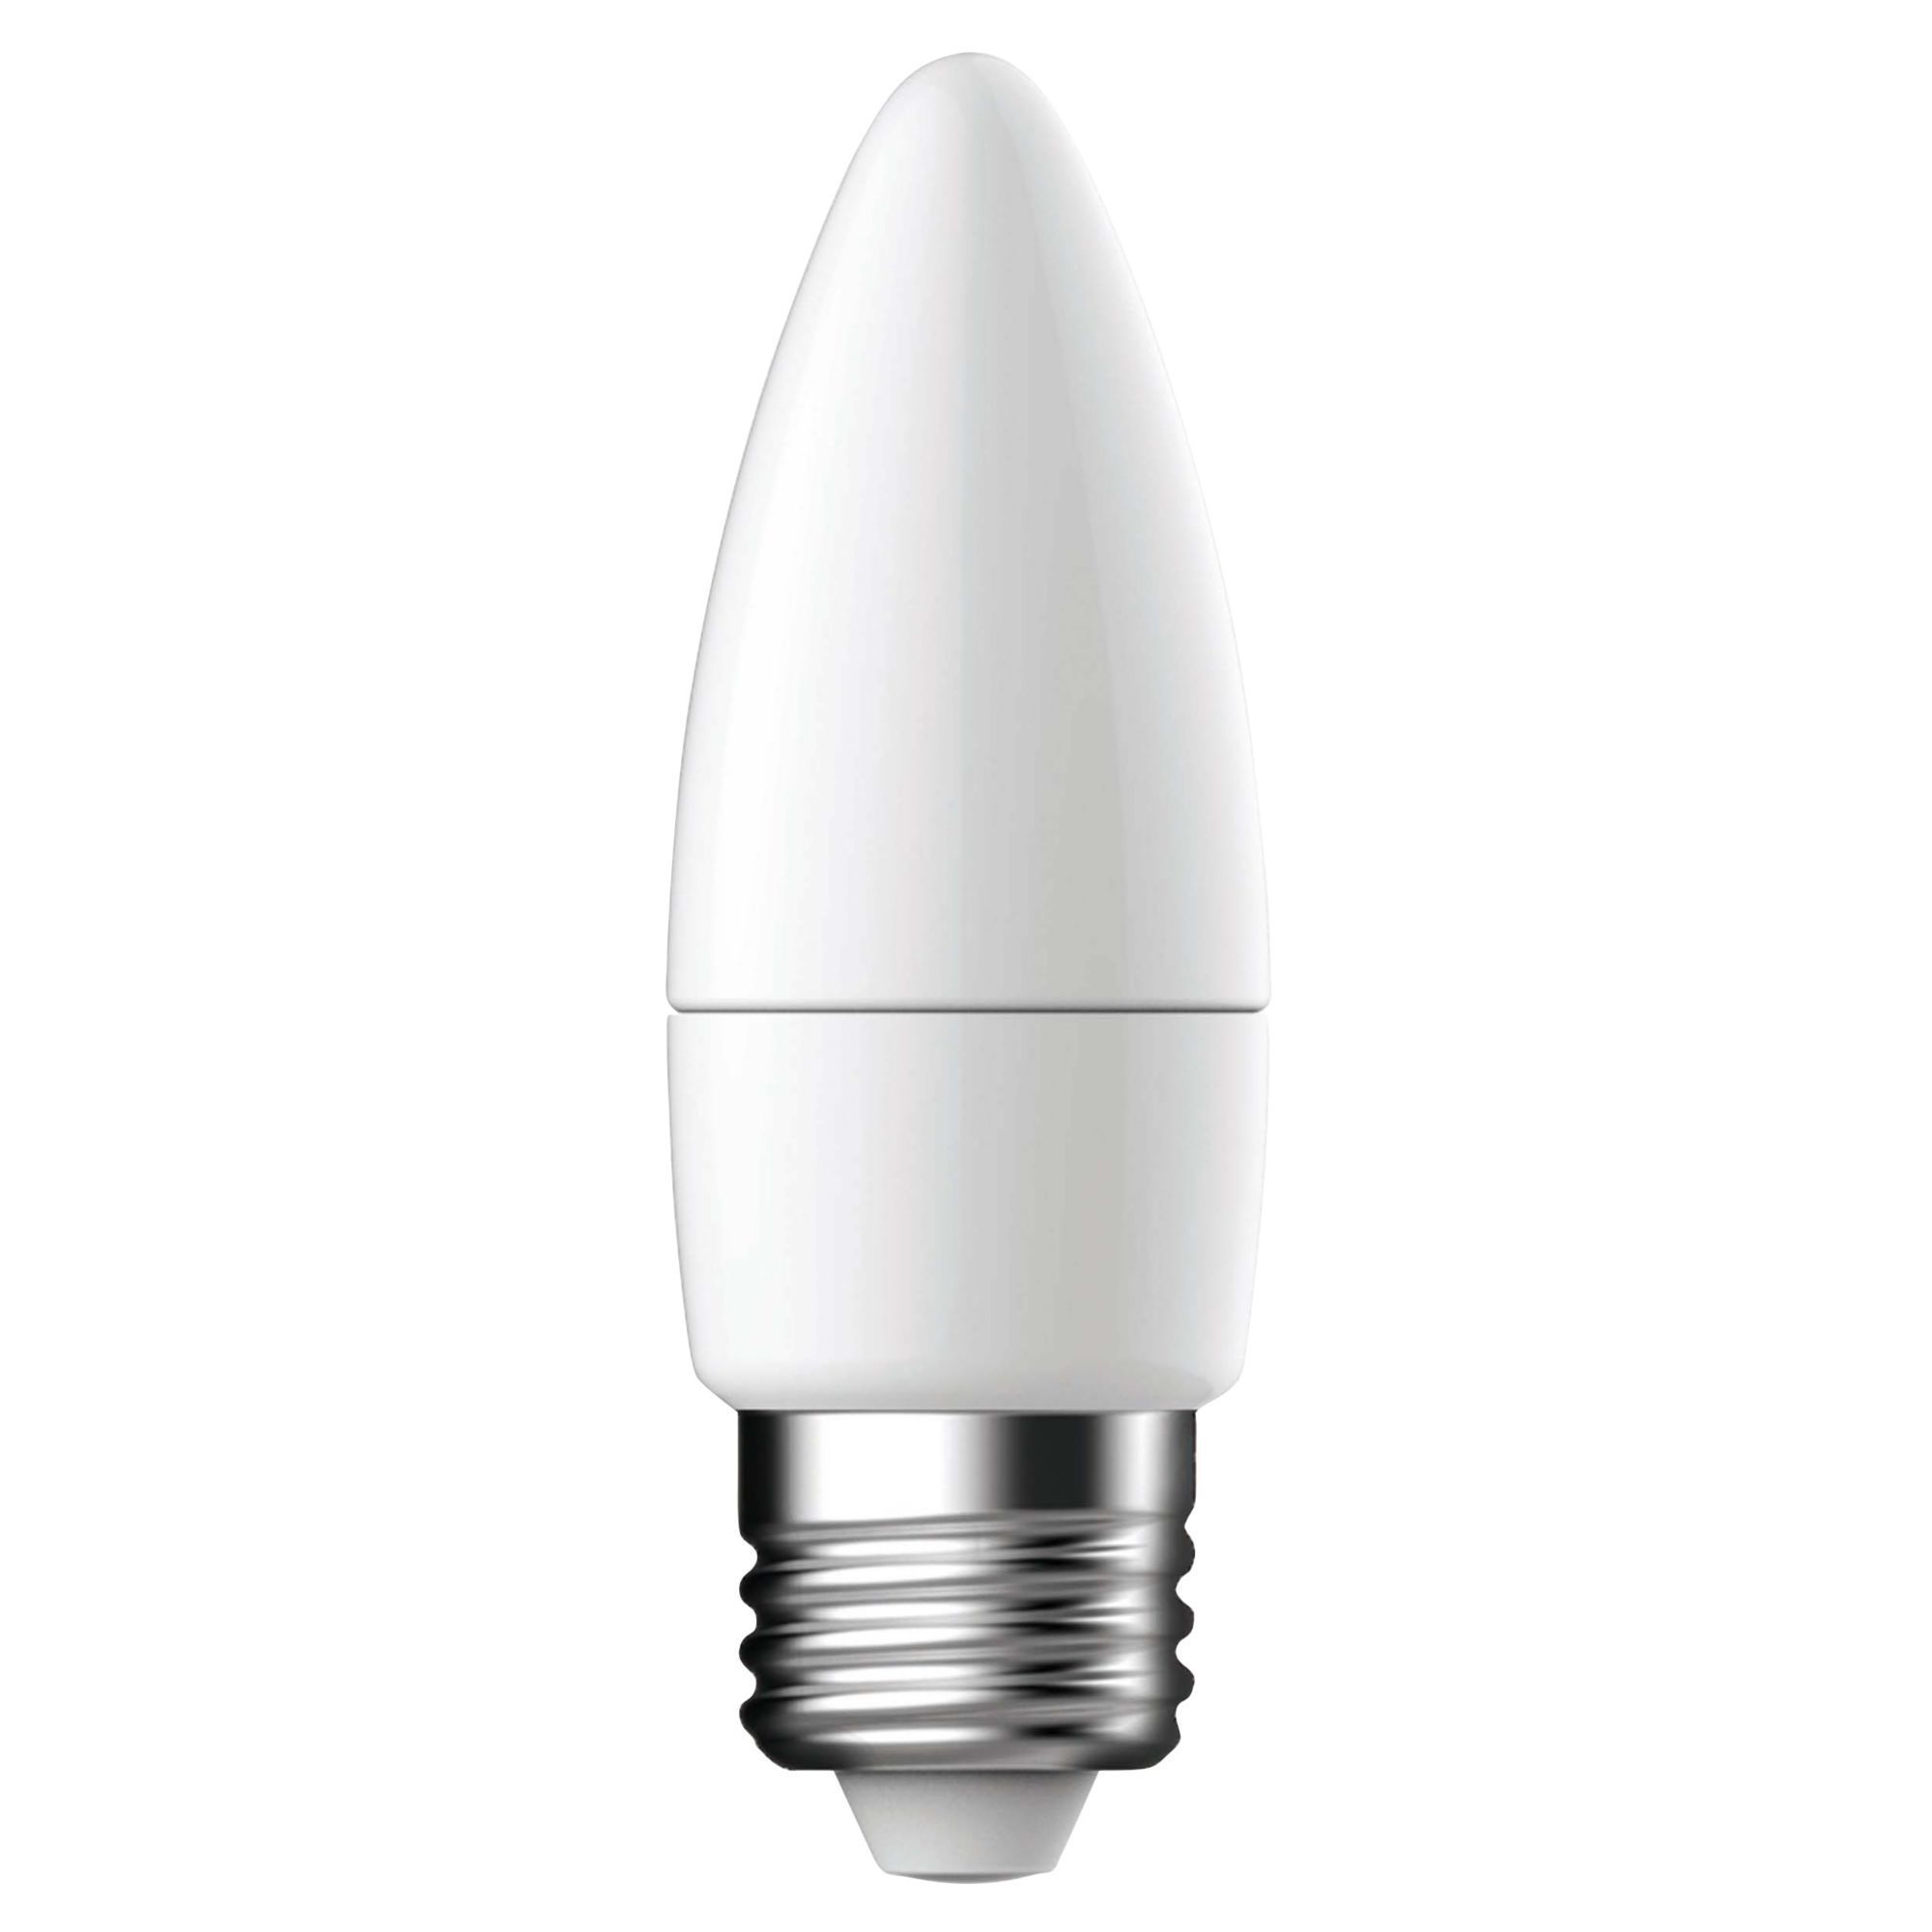 Diall E27 3.6W 250lm LED Light bulb